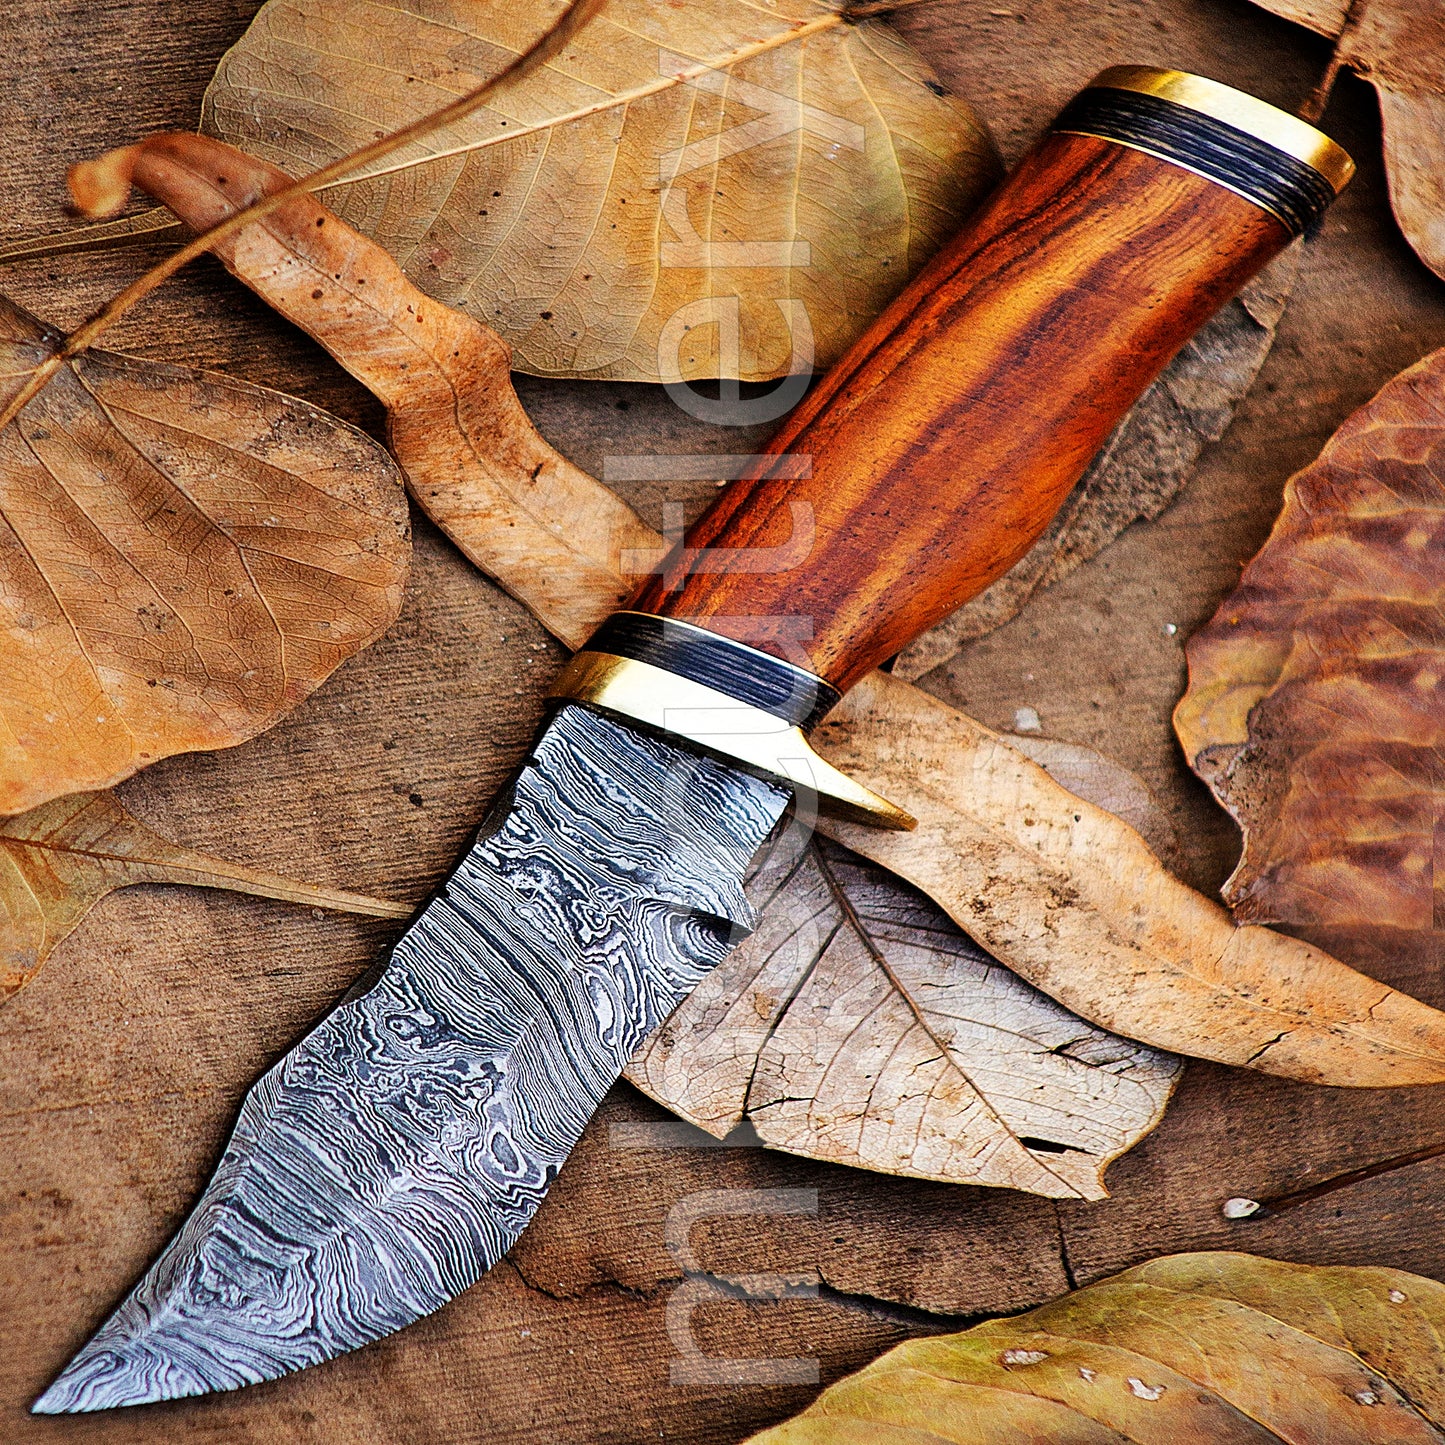 Damascus Steel Skinner Knife With Rose Wood Handle | mhscutlery